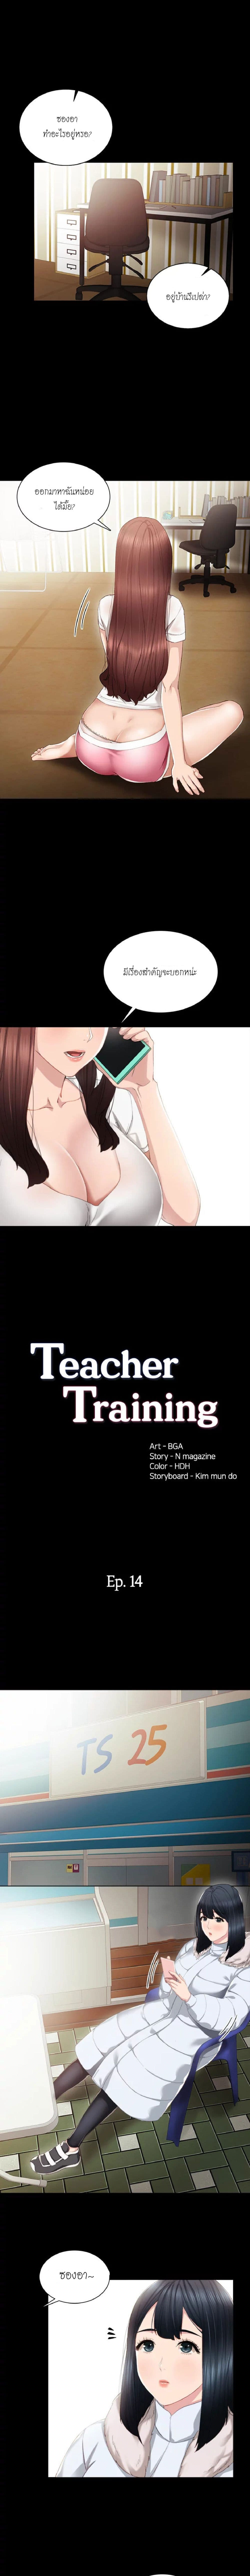 Teaching Practice